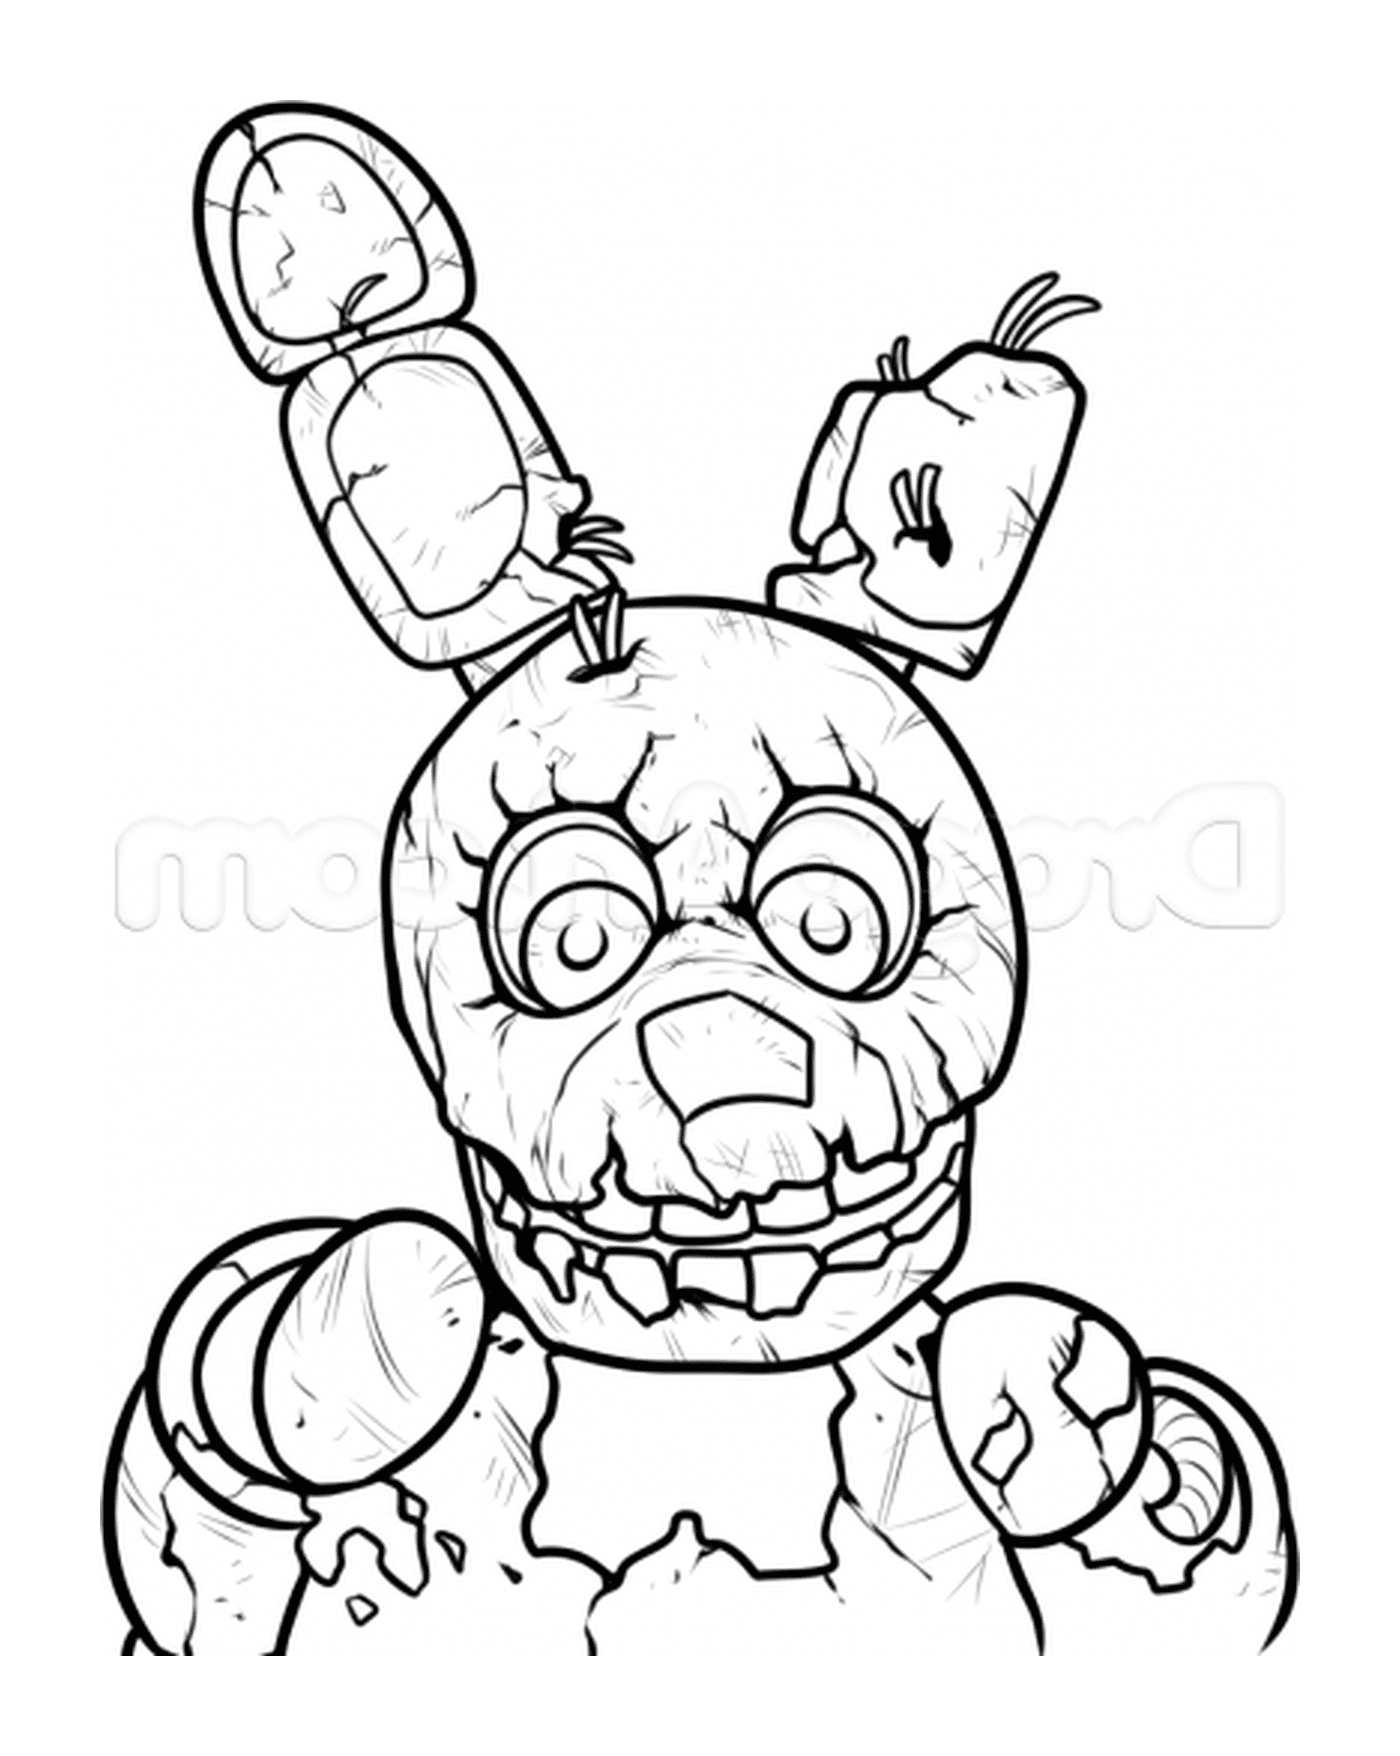   Comment dessiner Toy Bonnie de Five Nights at Freddy's 